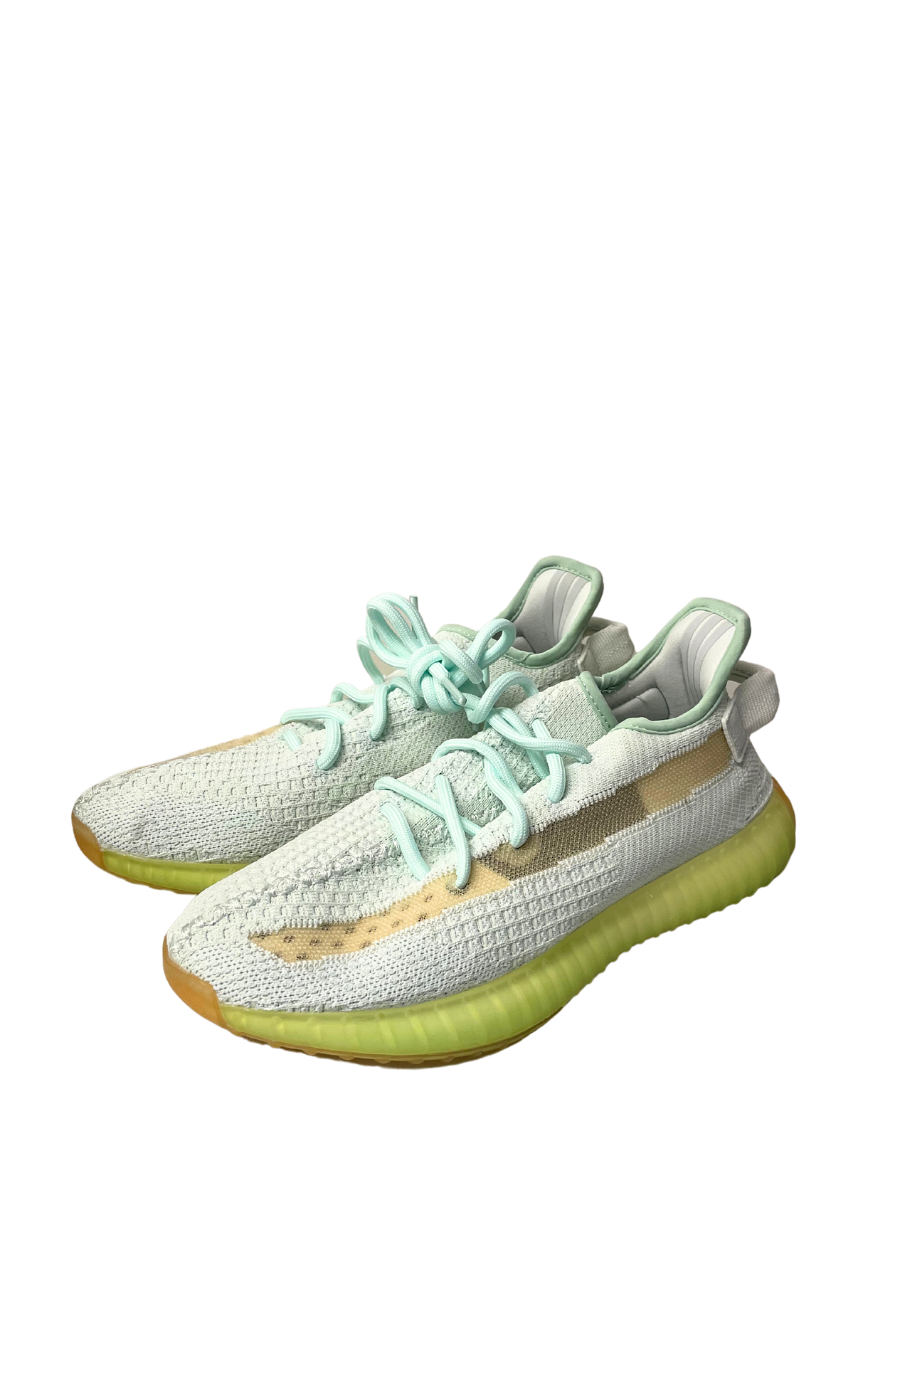 Adidas Yeezy Boost 350 HyperSpace Sneaker, Size Men's 8.5 — Mercer Island  Thrift Shop